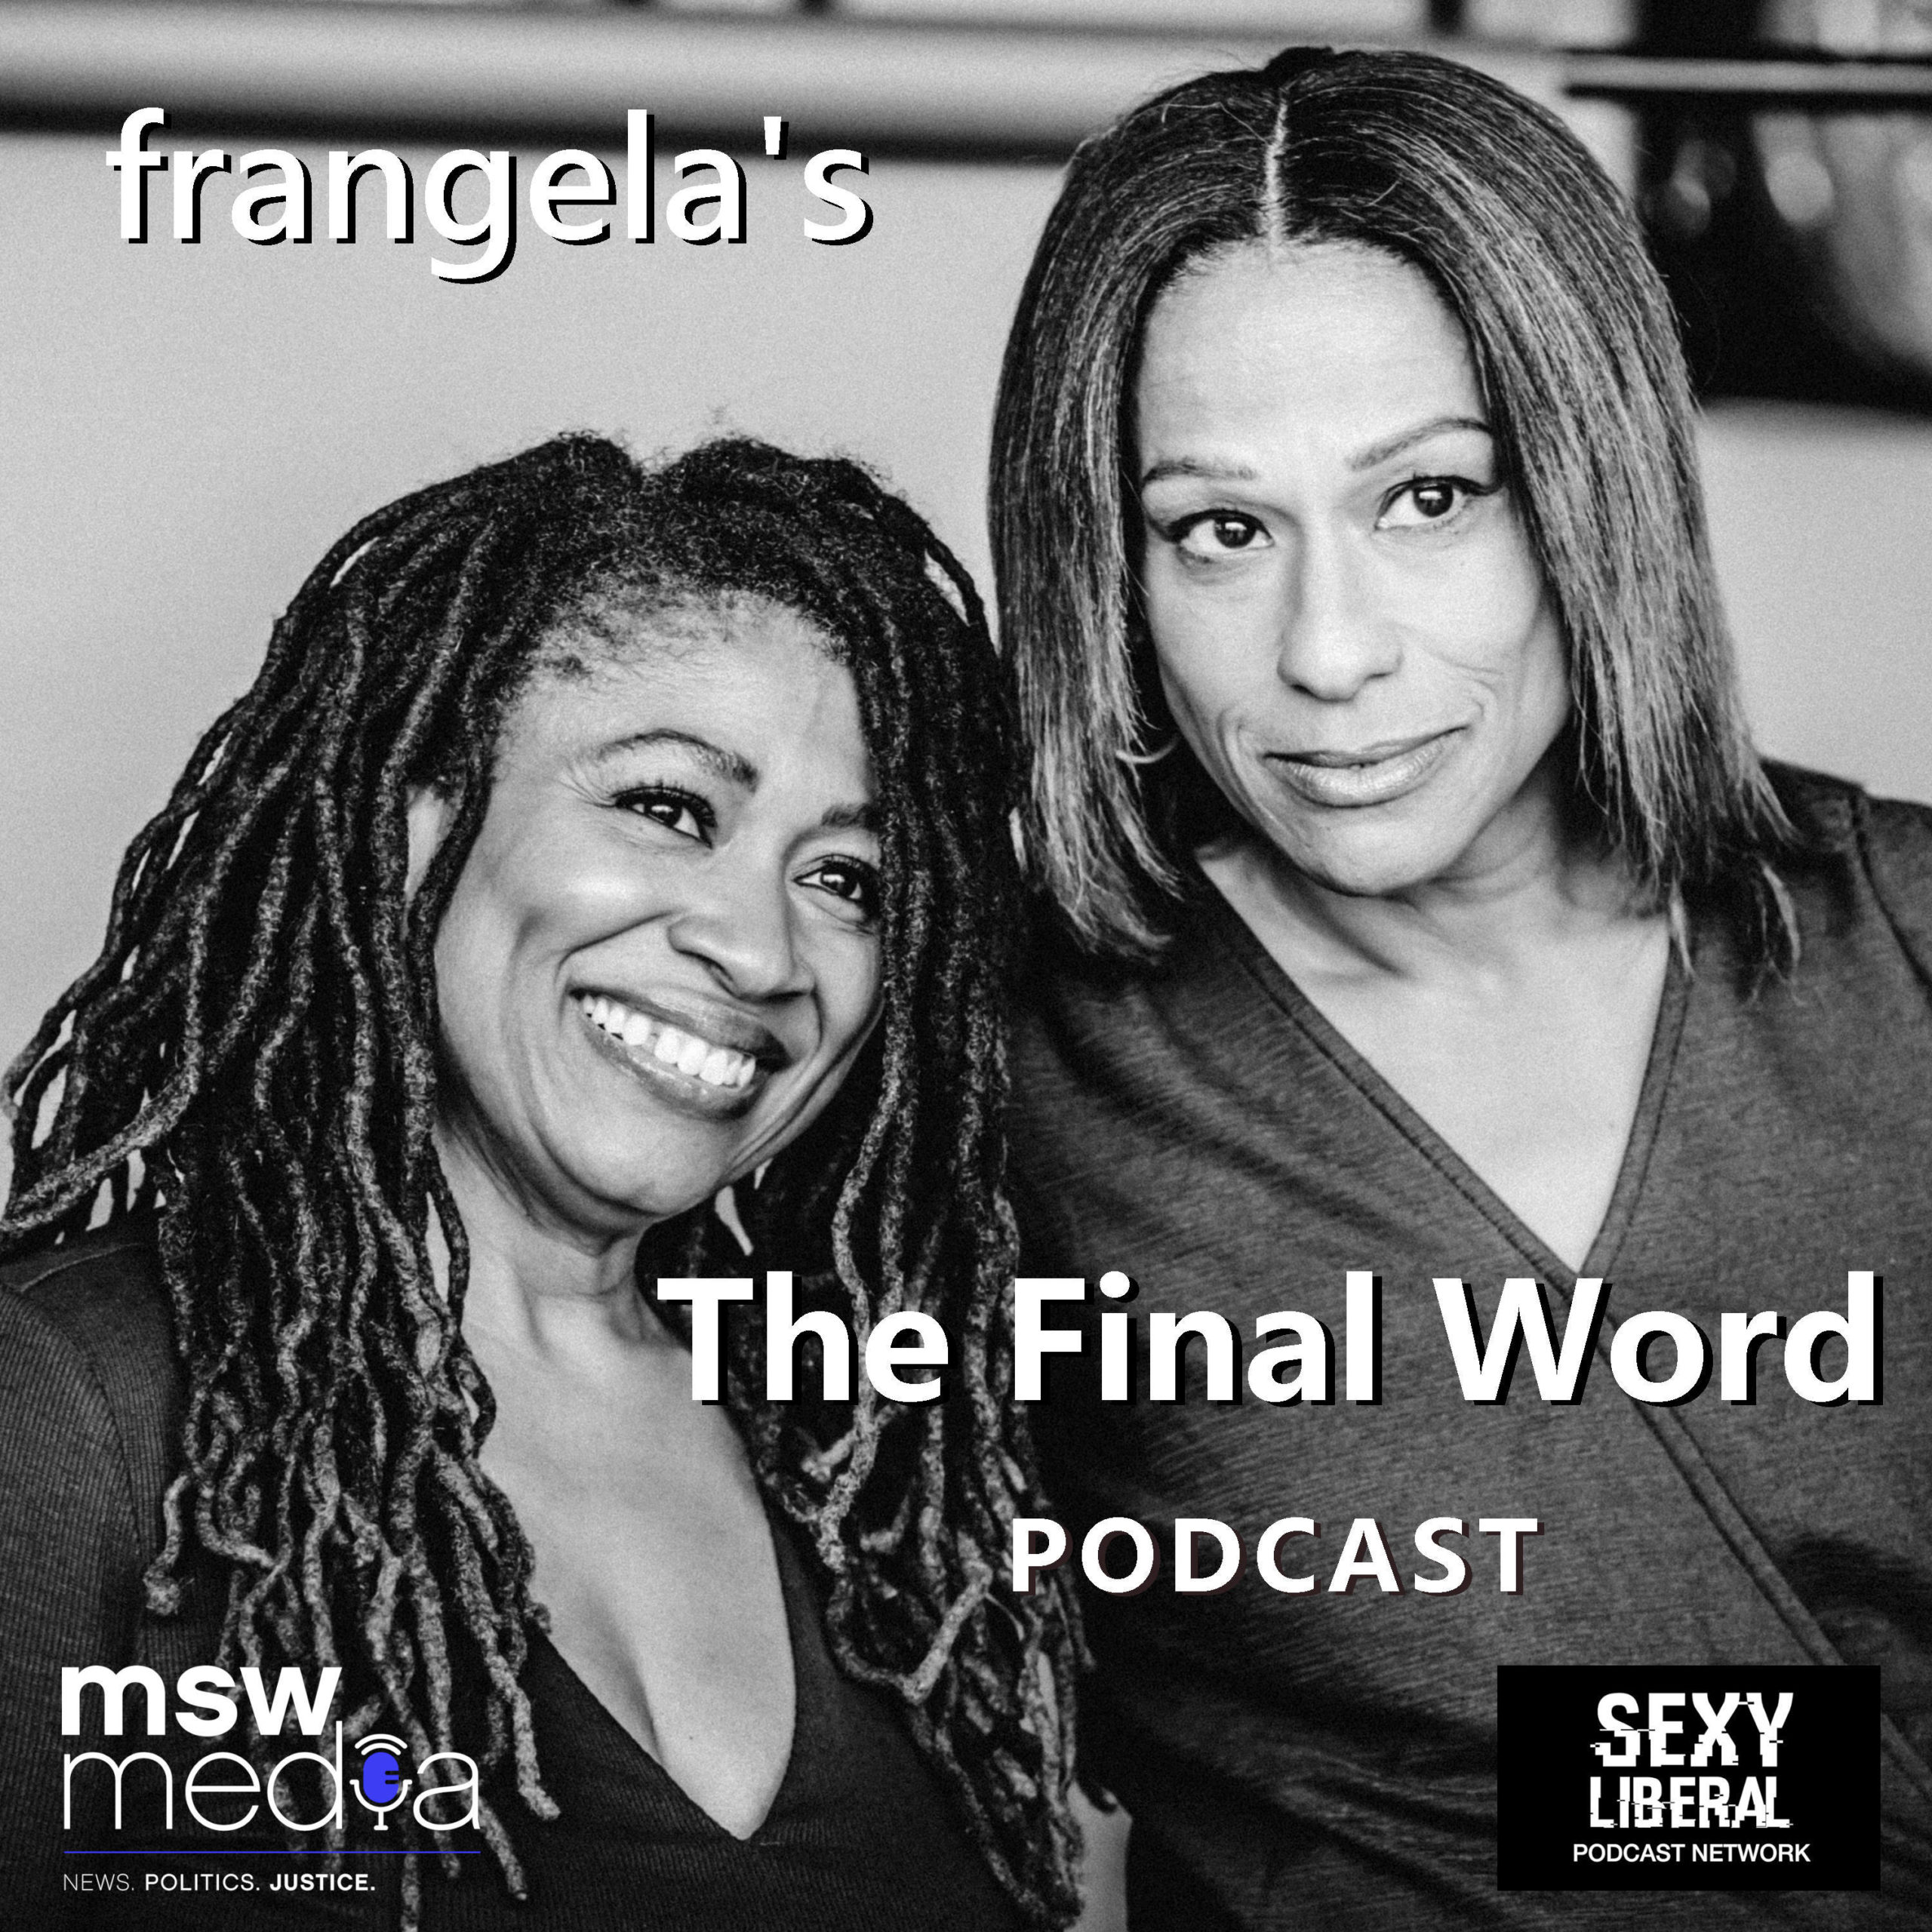 Frangela's: The Final Word Podcast